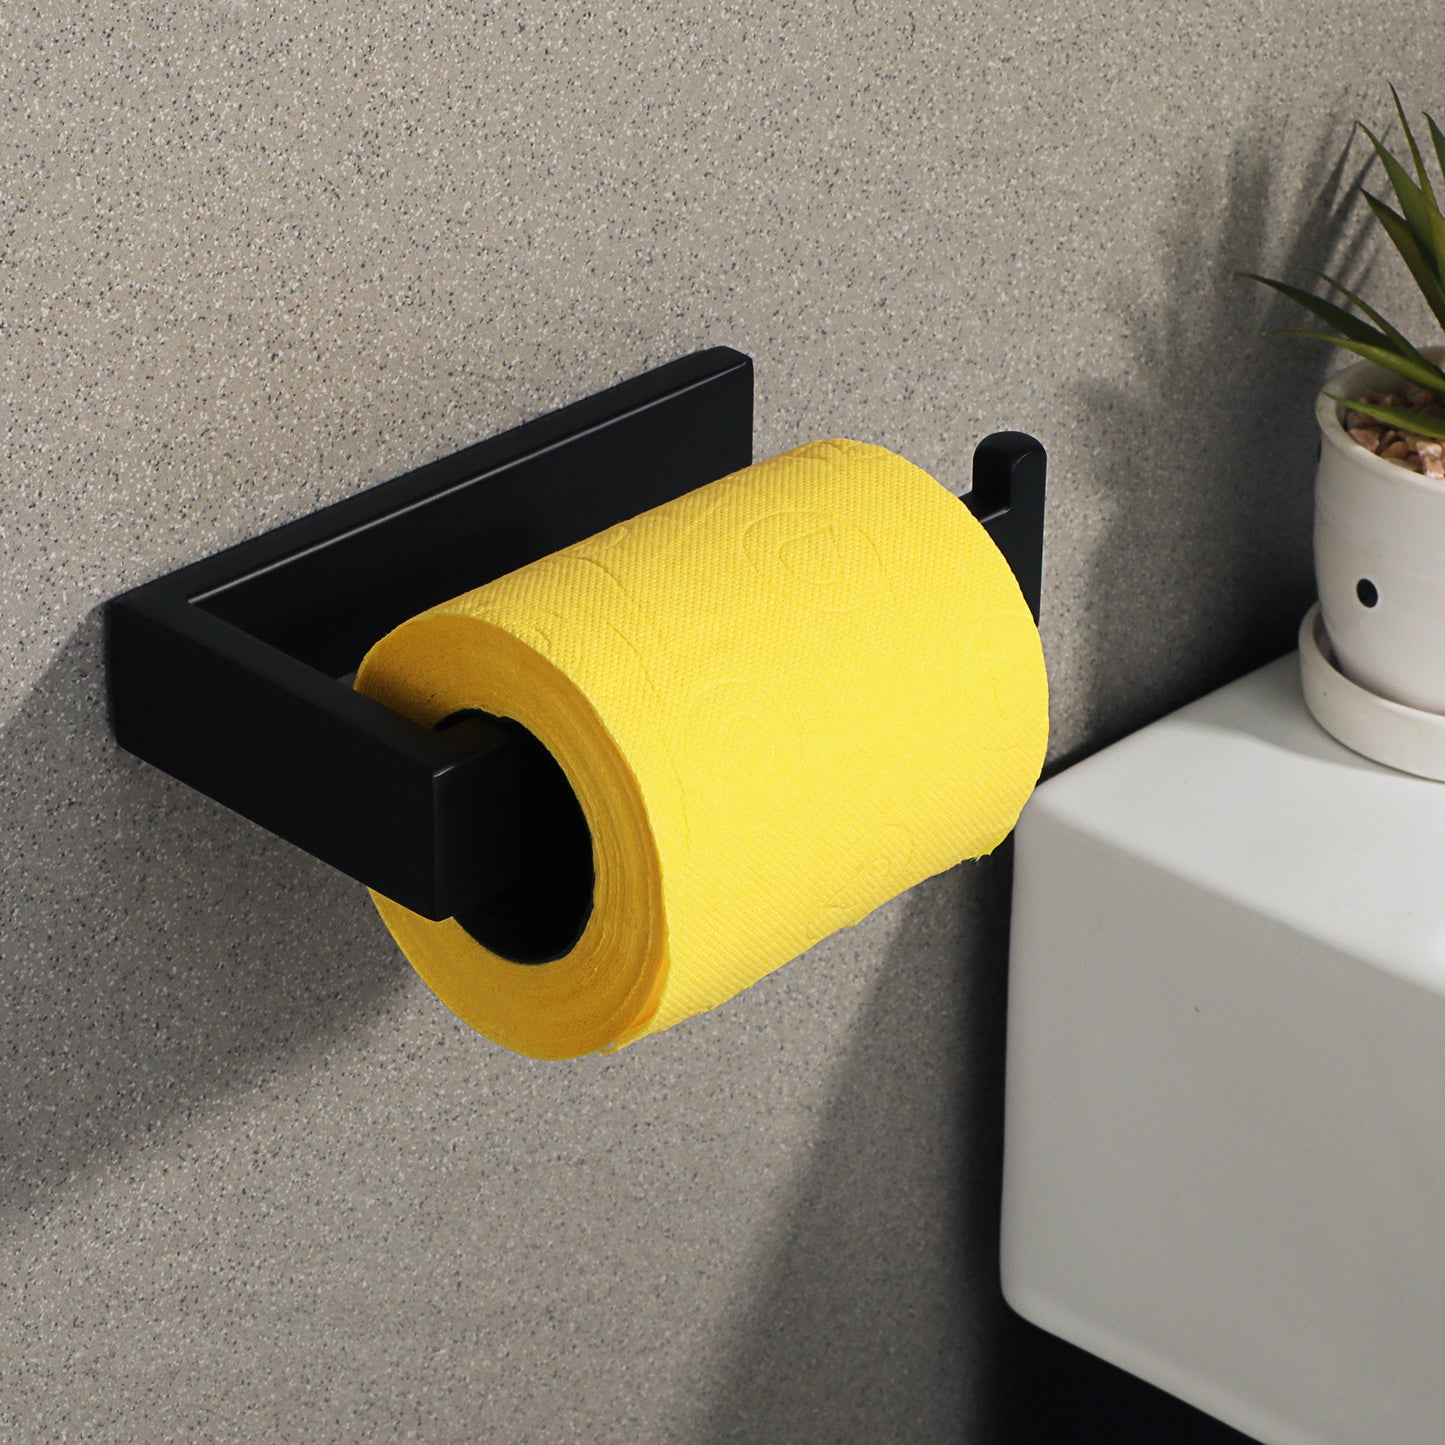 Sayayo Wall Mount Toilet Paper Holder (U-shape & Square Body)